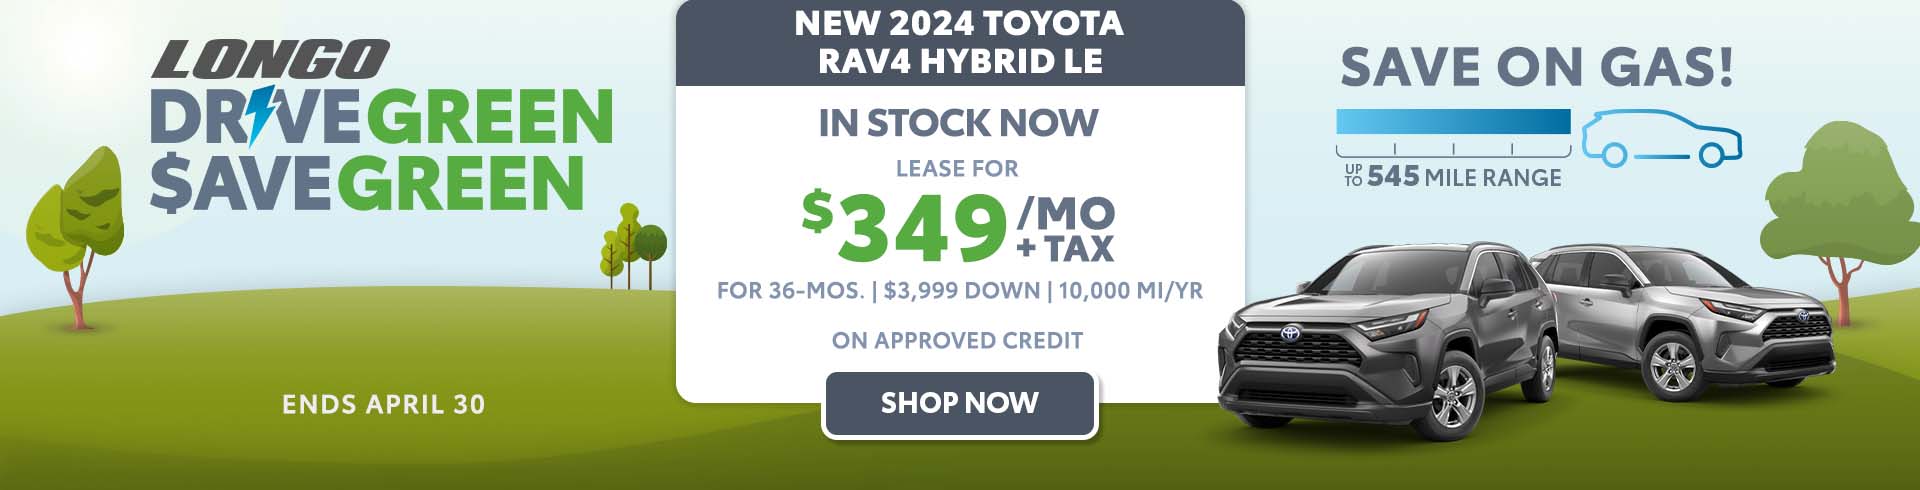 Lease a new 2024 Toyota RAV4 Hybrid LE for $349/mo + tax